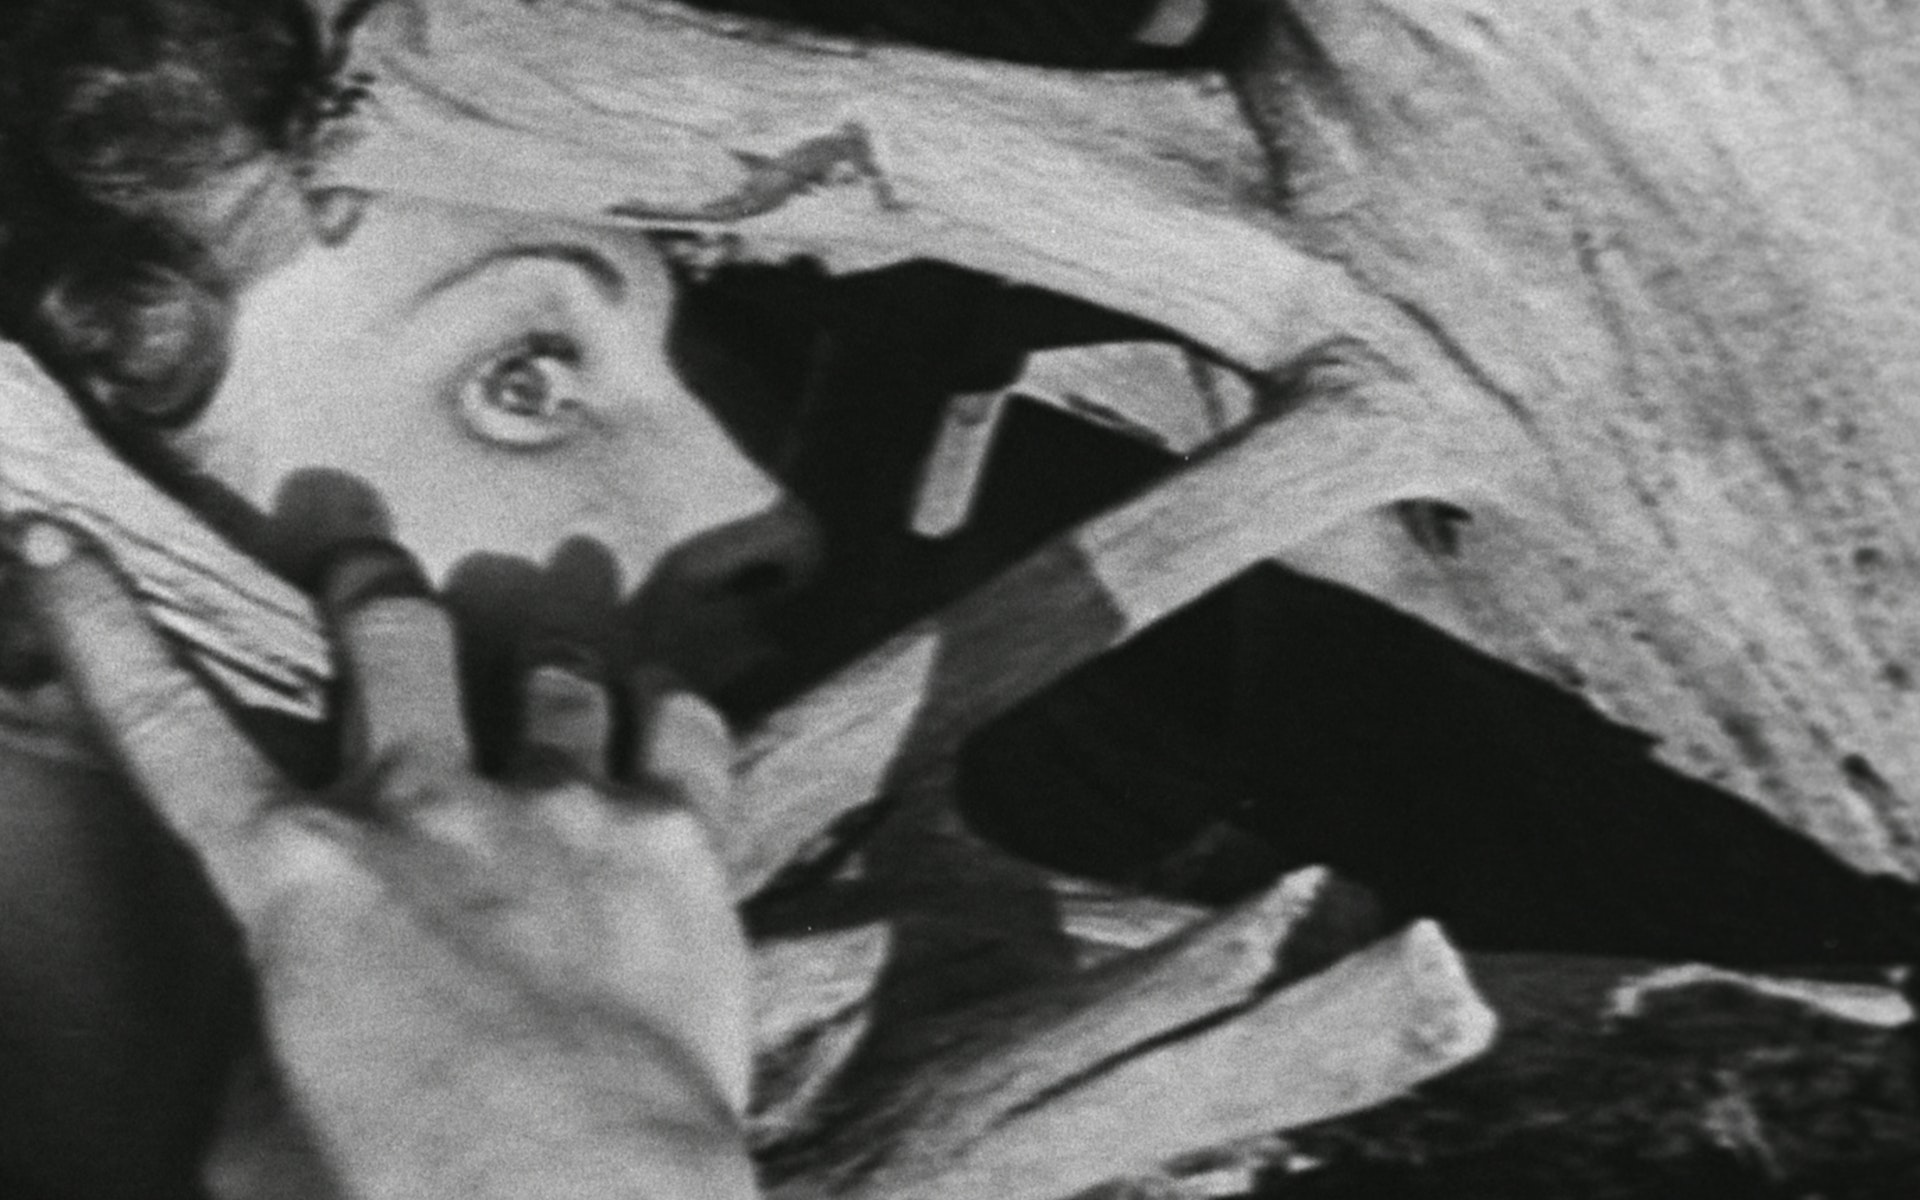 A women's eye peeks through a tangle wodden branch.